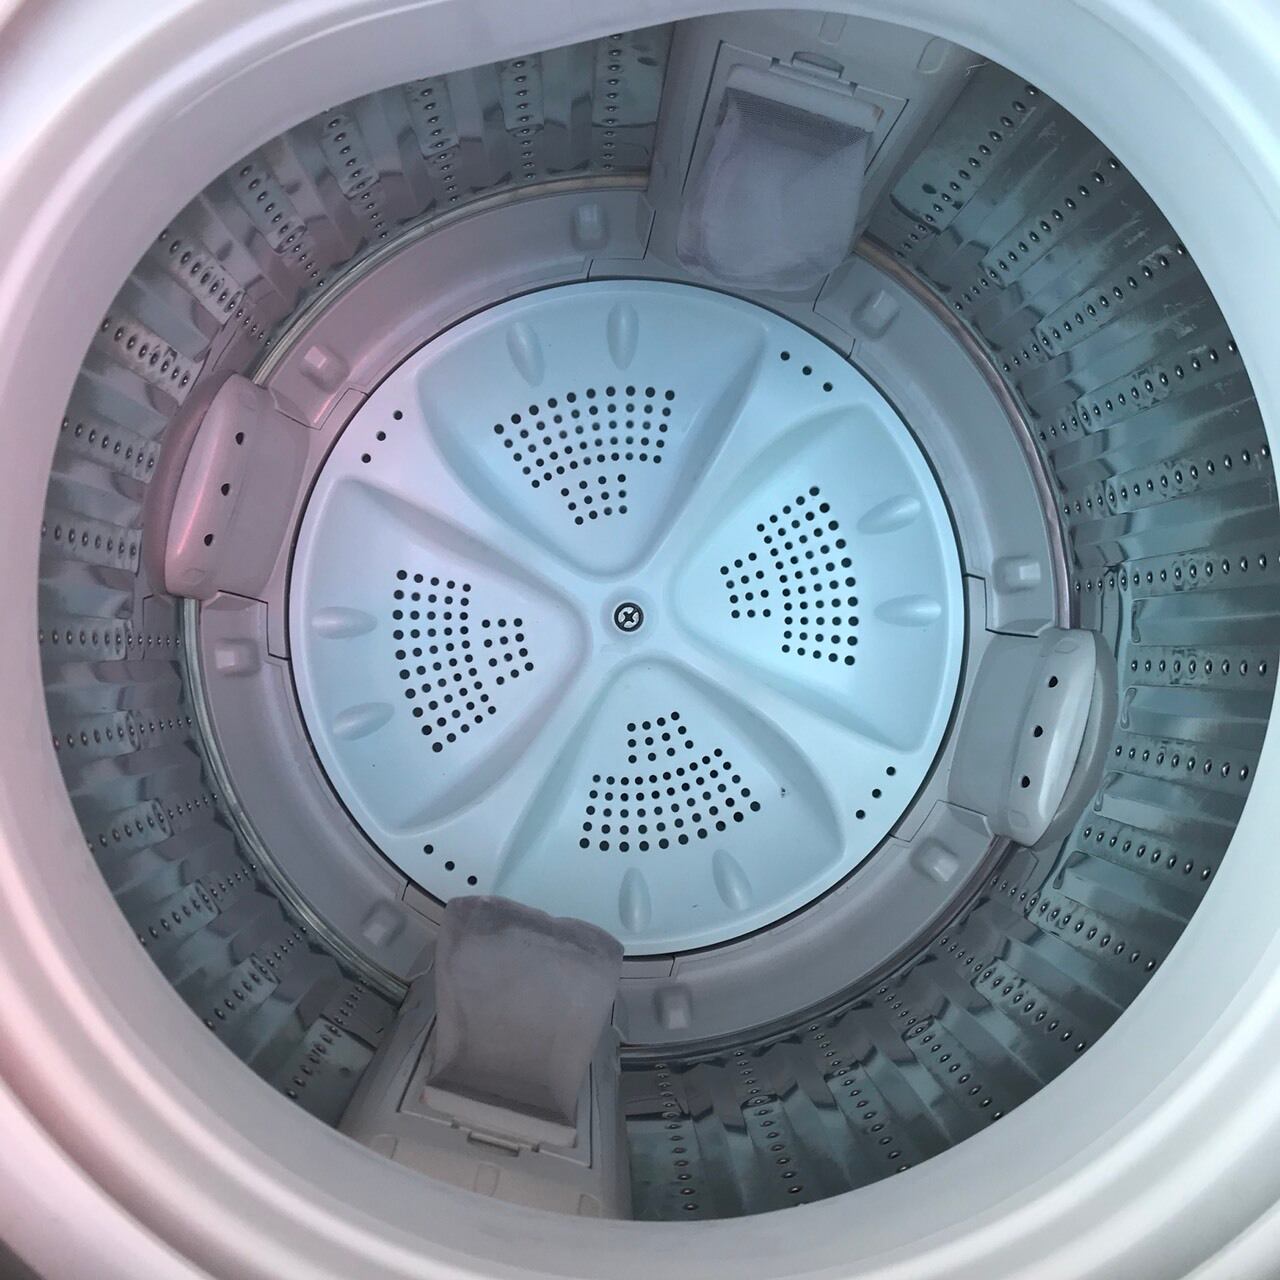 AQUA 2015年製 簡易乾燥機能付き洗濯機 5.0kg AQW-S50D(W